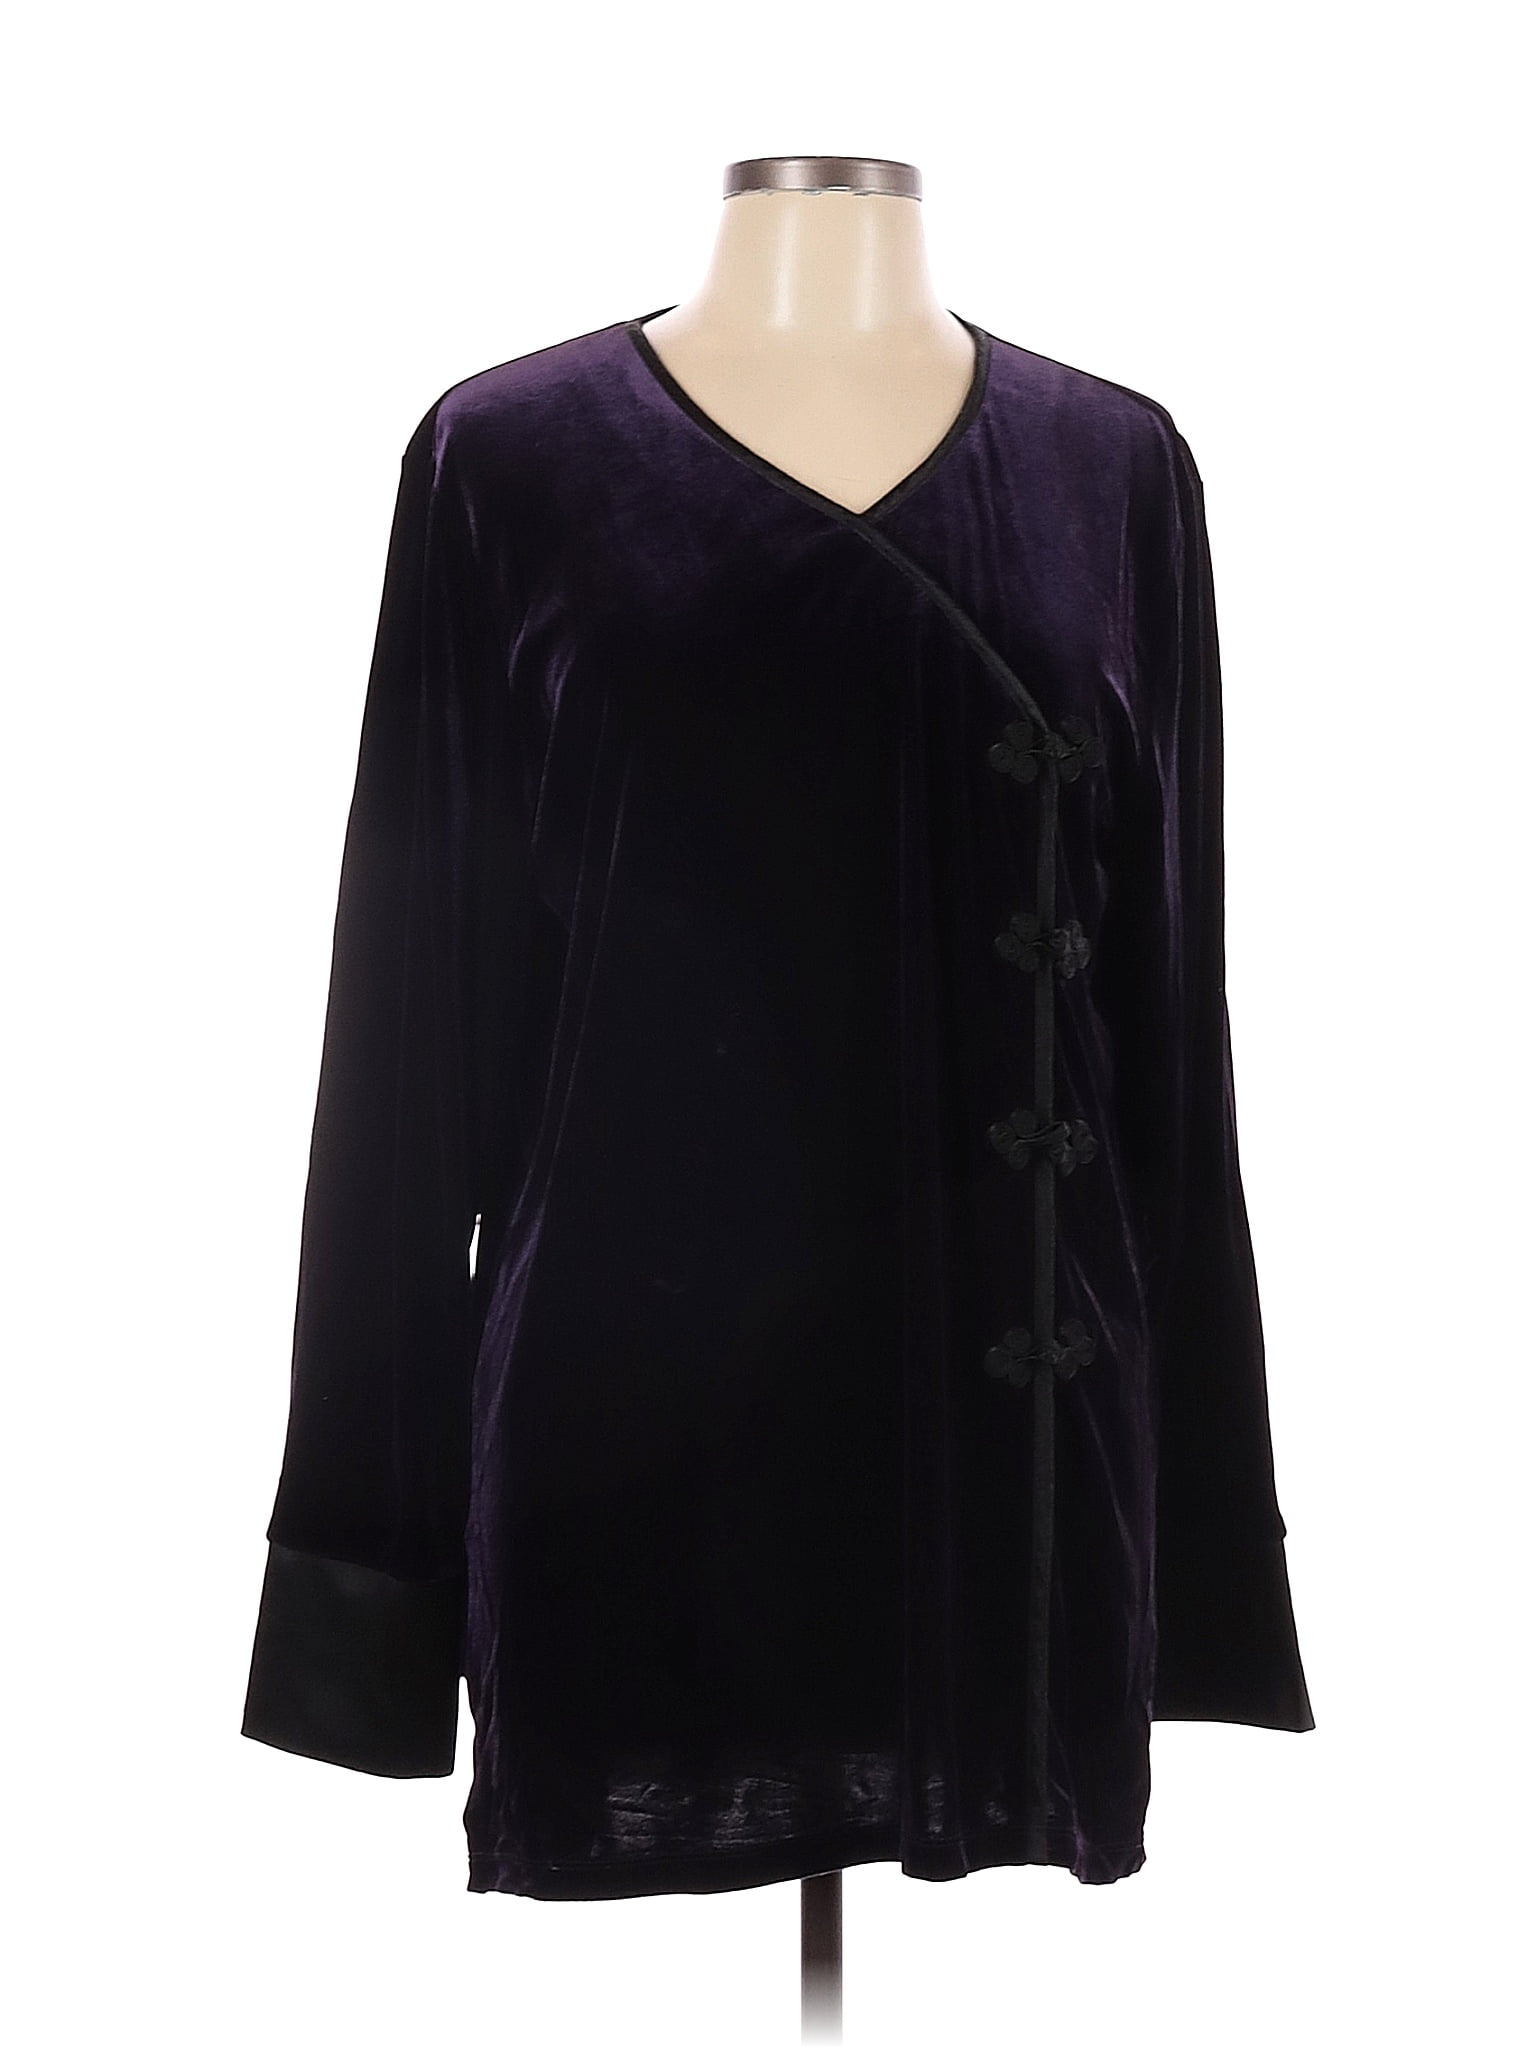 Carole Little Solid Purple Black Casual Dress Size 12 - 68% off | thredUP